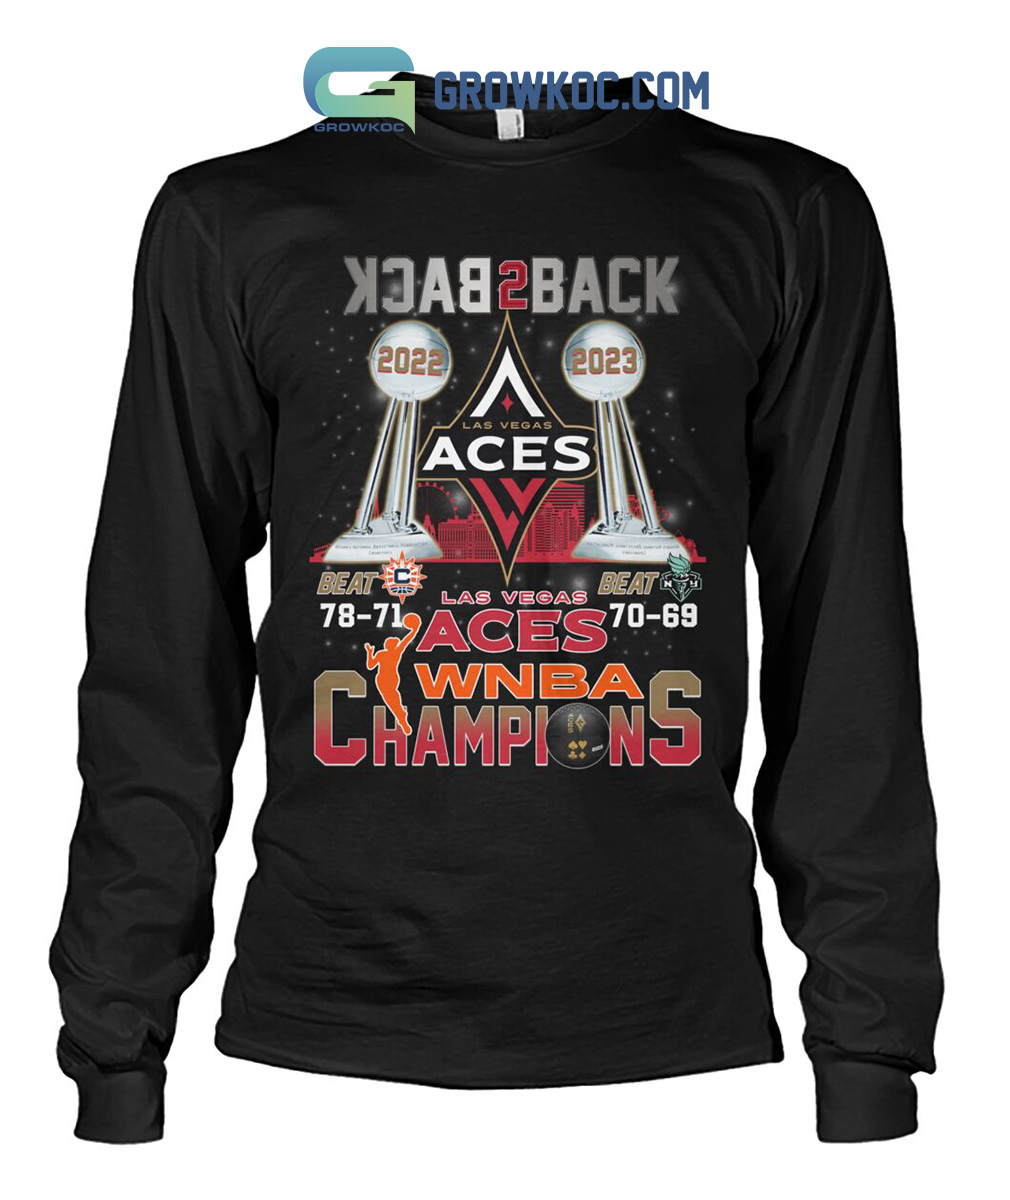 Las Vegas Aces WNBA champions back 2 back 2022 2023 shirt, hoodie